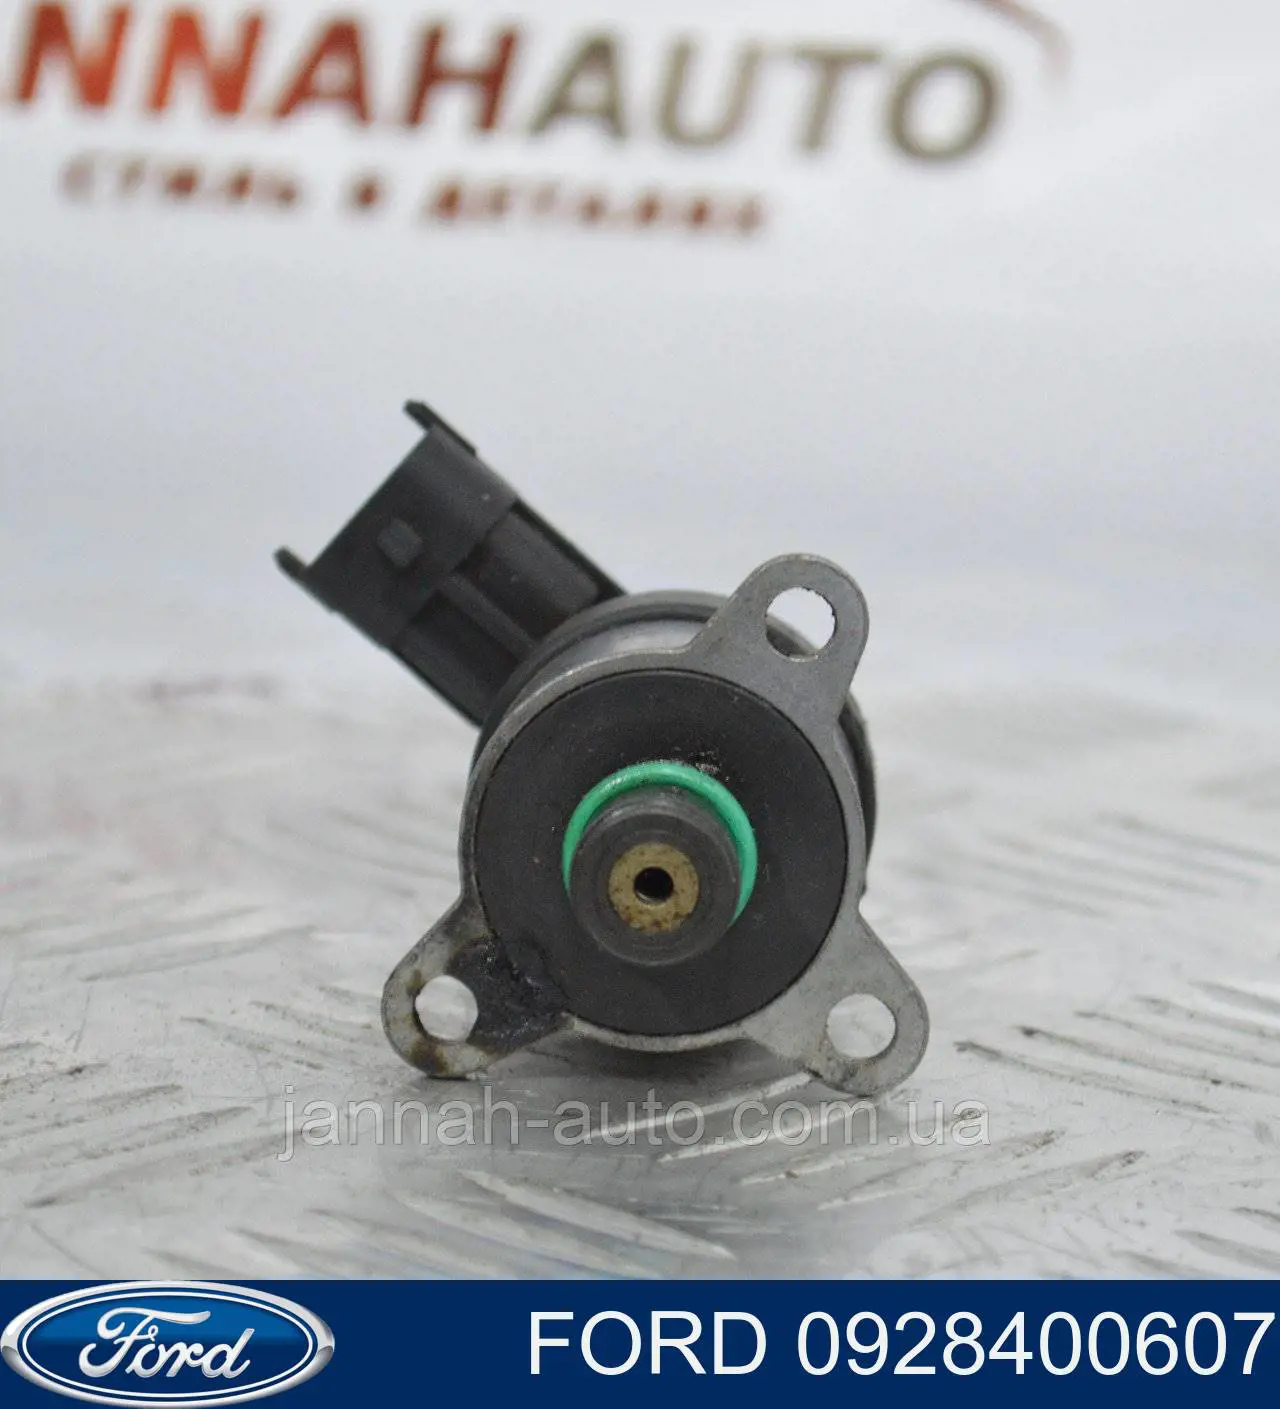 0928400607 Ford клапан регулировки давления (редукционный клапан тнвд Common-Rail-System)